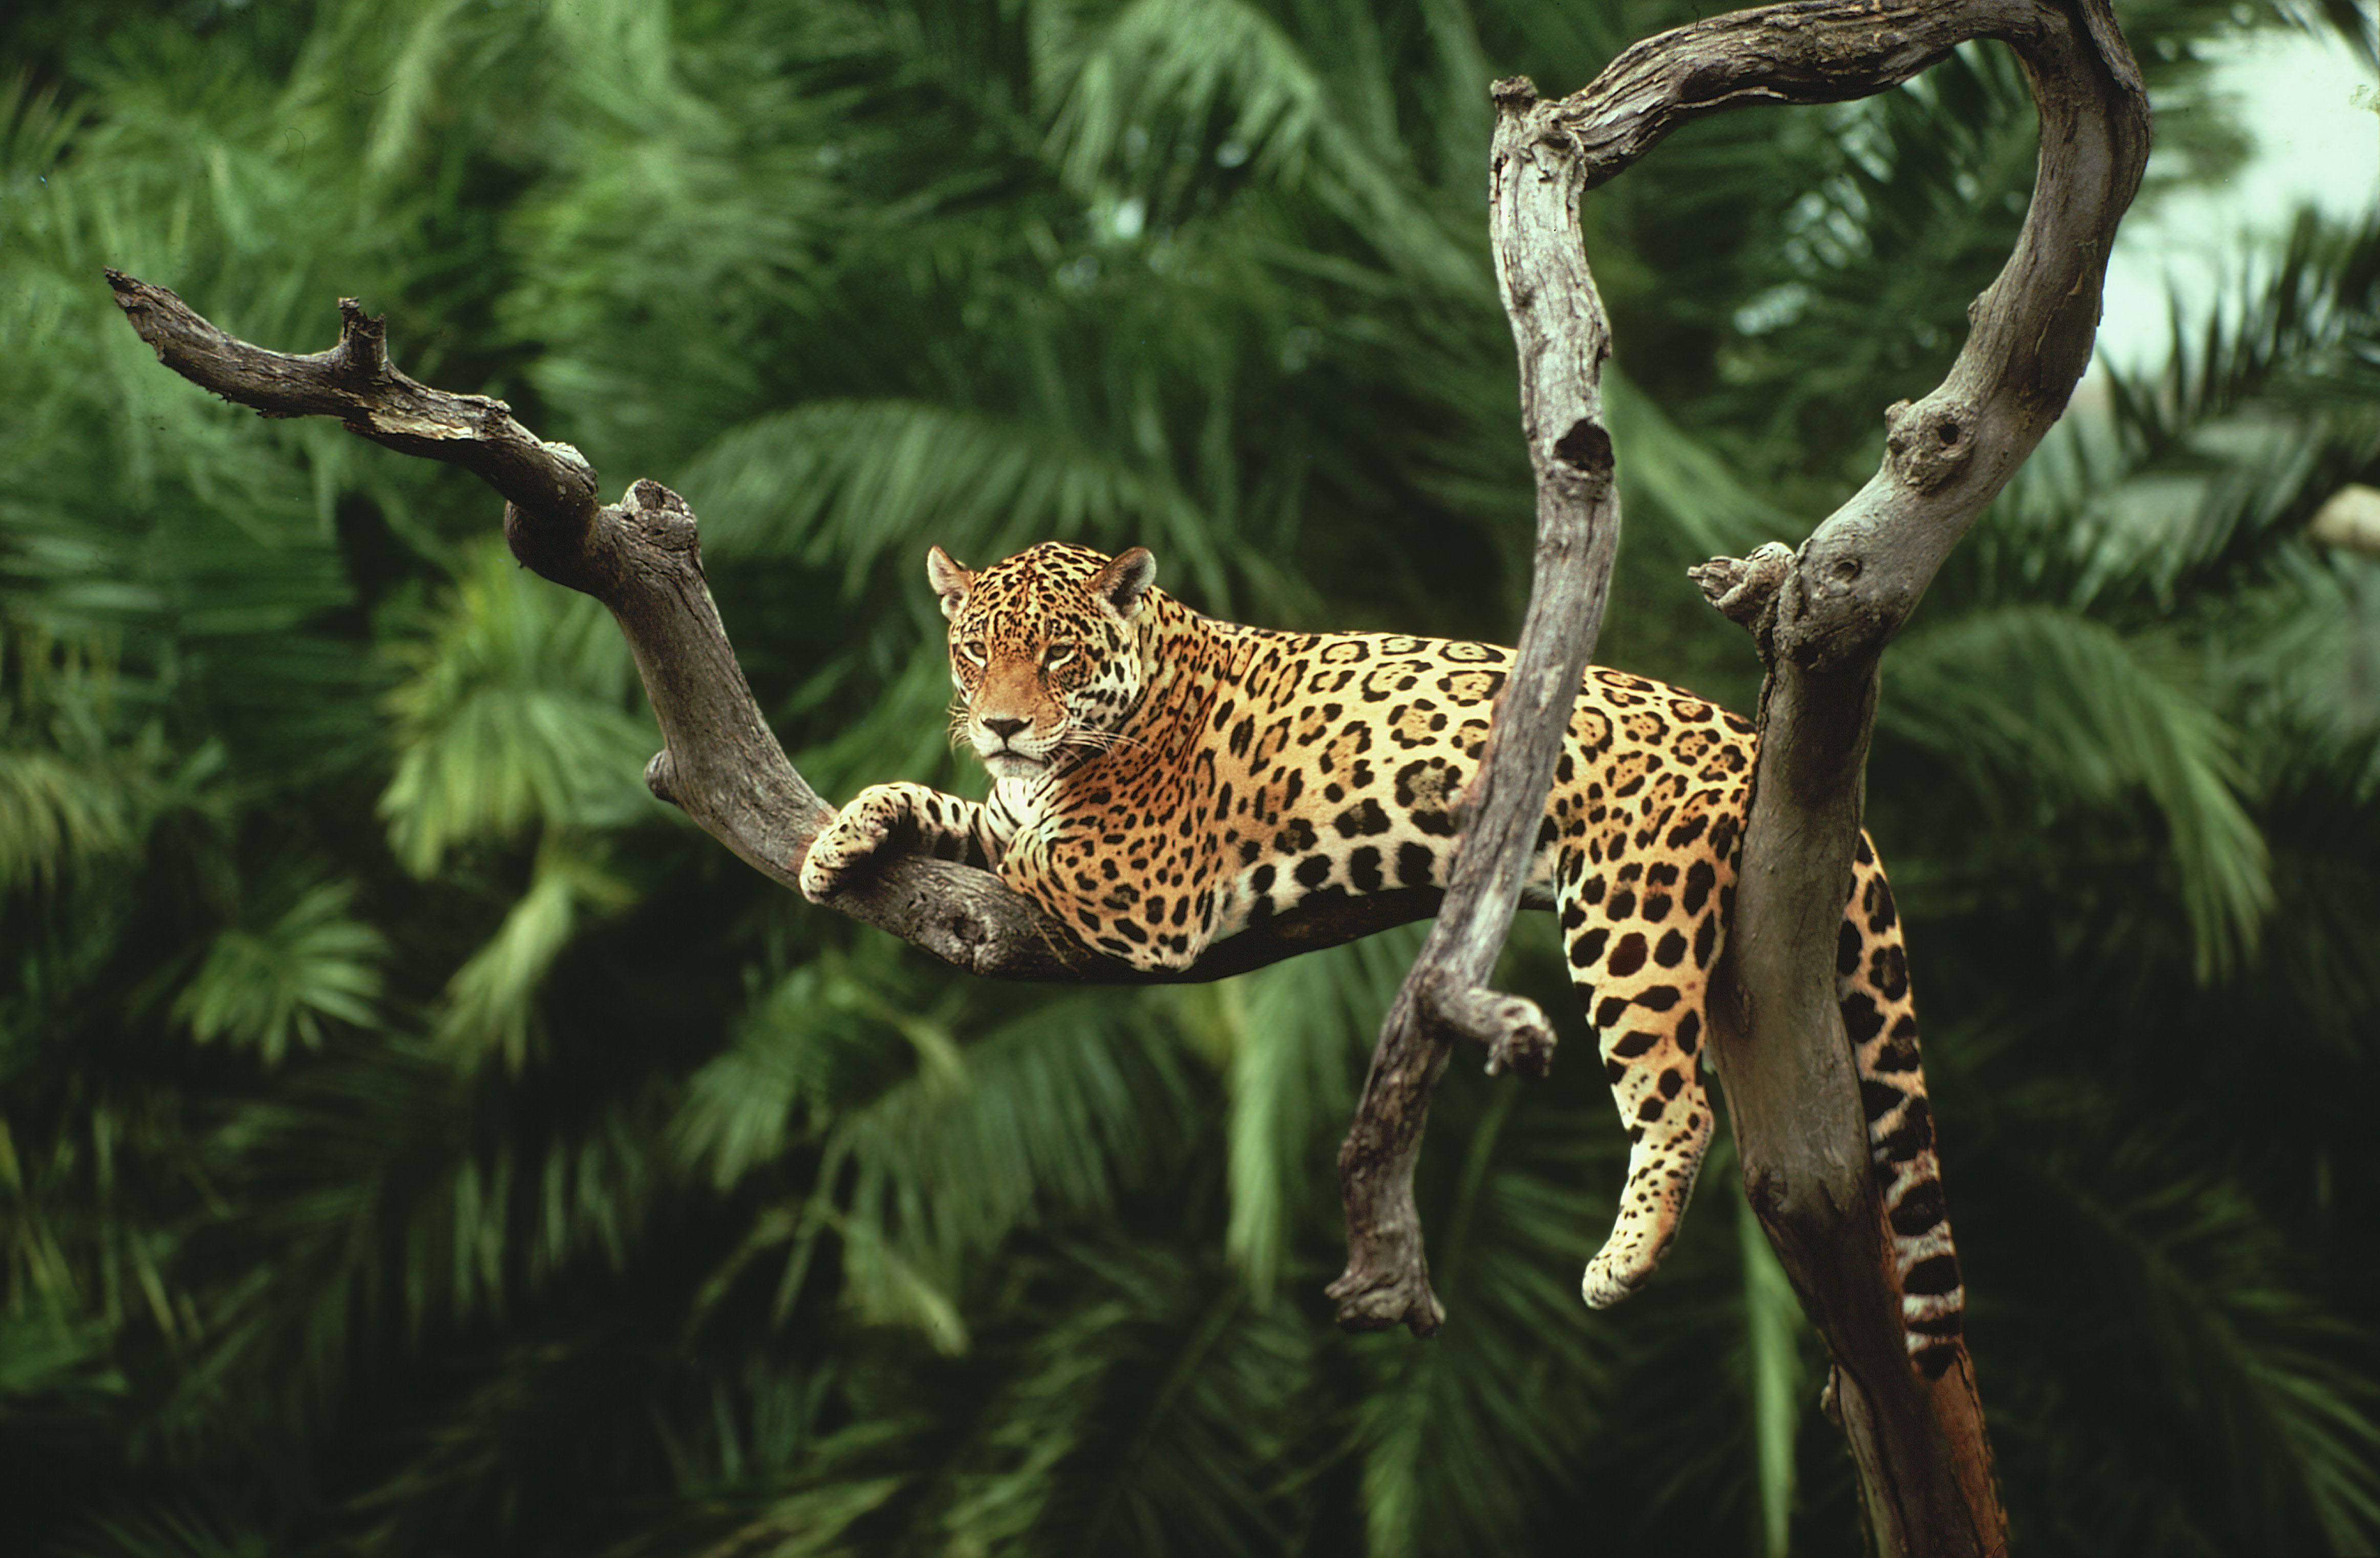 Rainforest Animals Wallpapers Top Free Rainforest Animals Backgrounds